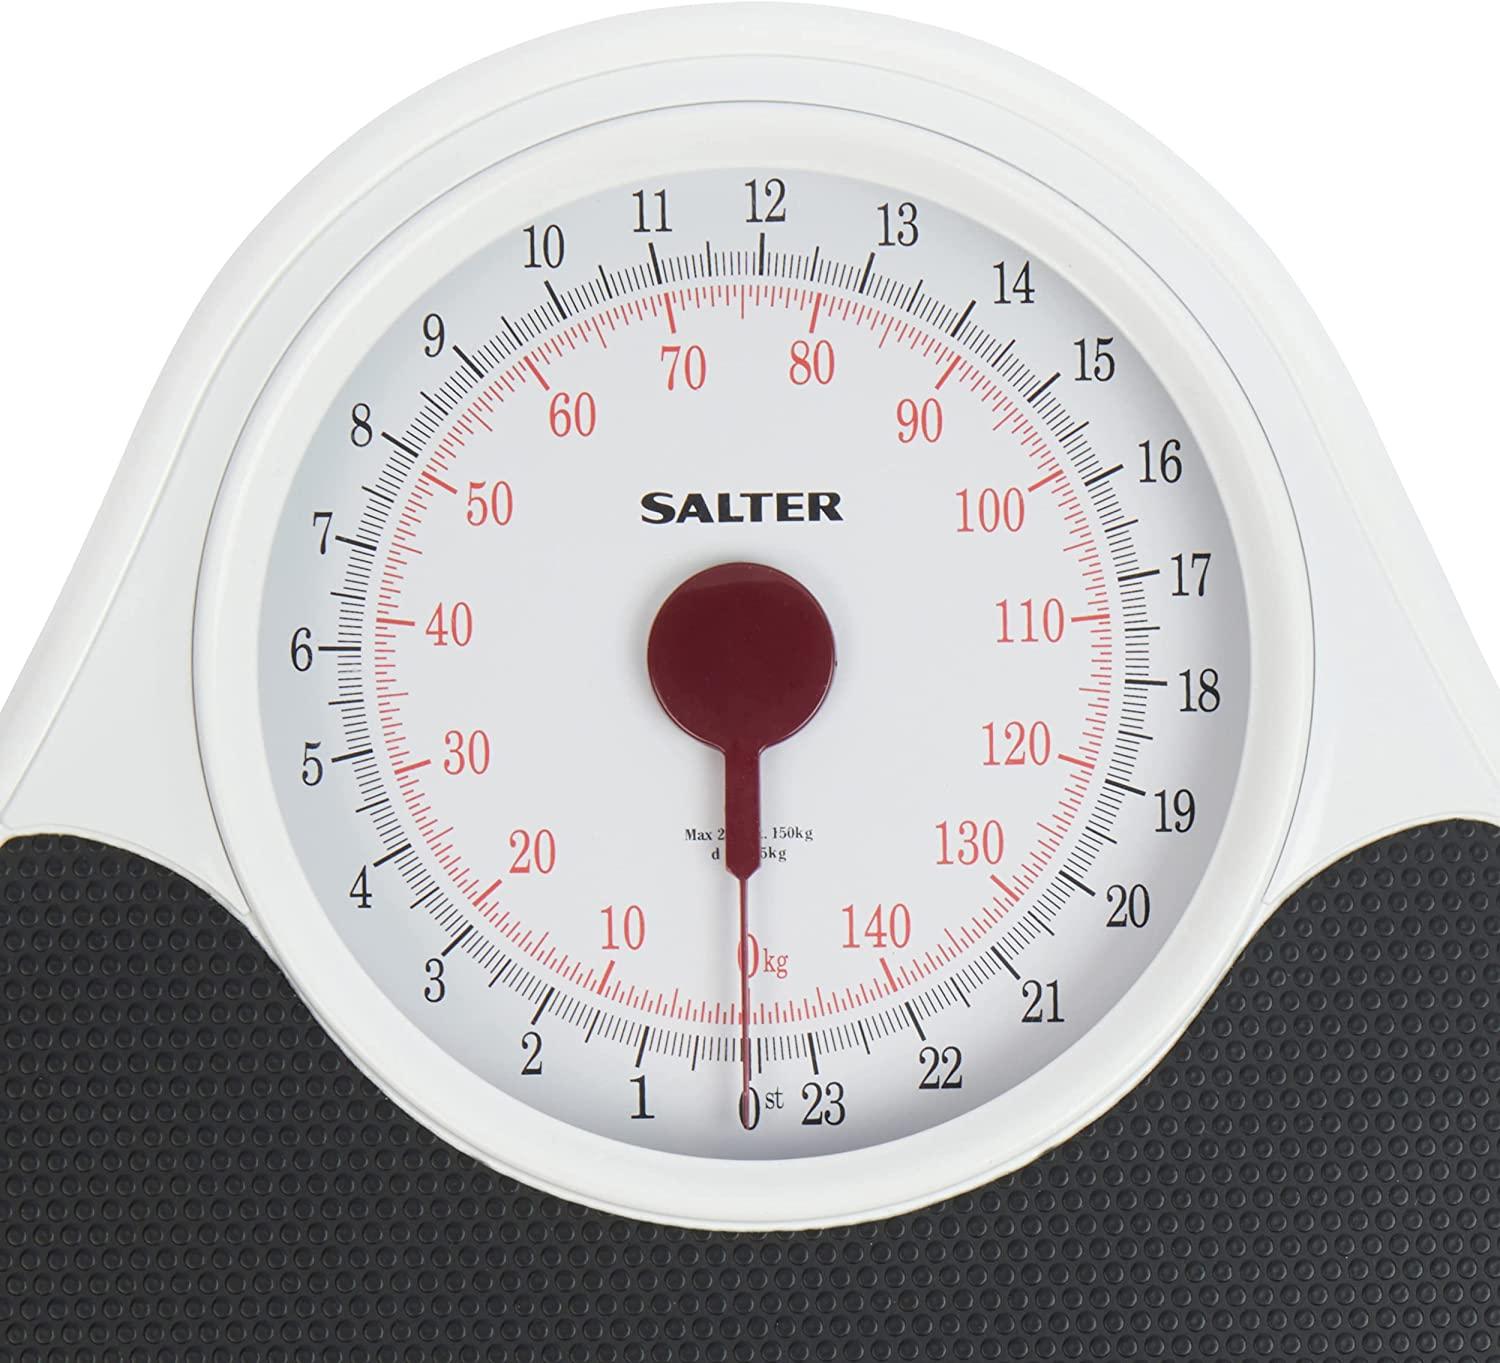 Salter Doctor Style Mechanical Bathroom Scale